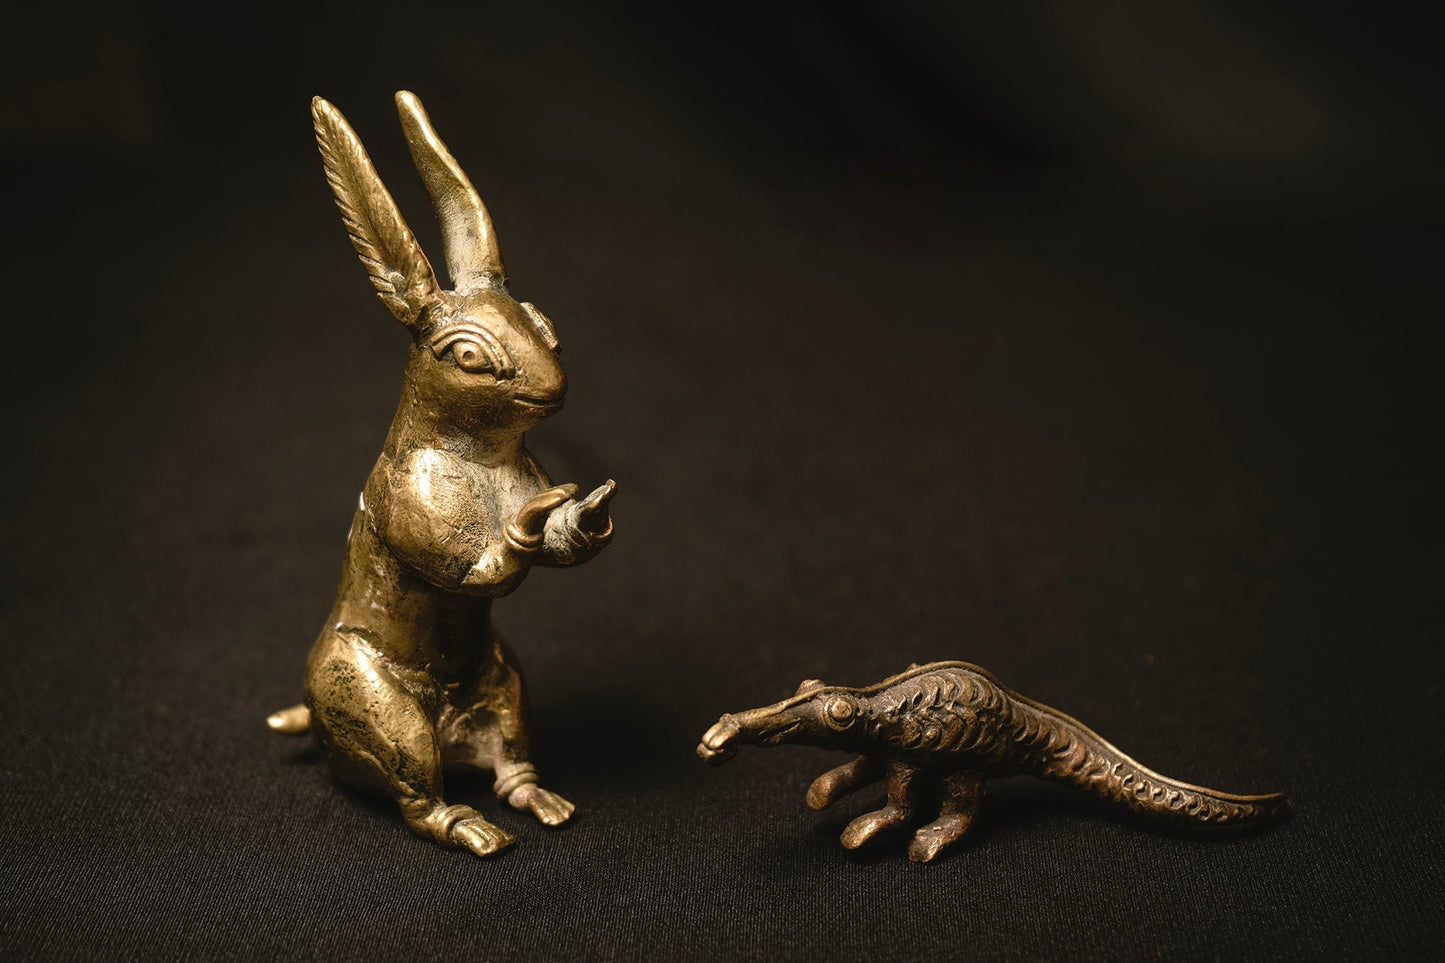 Dokra Craft Animals - Le lapin et le crocodile miniature